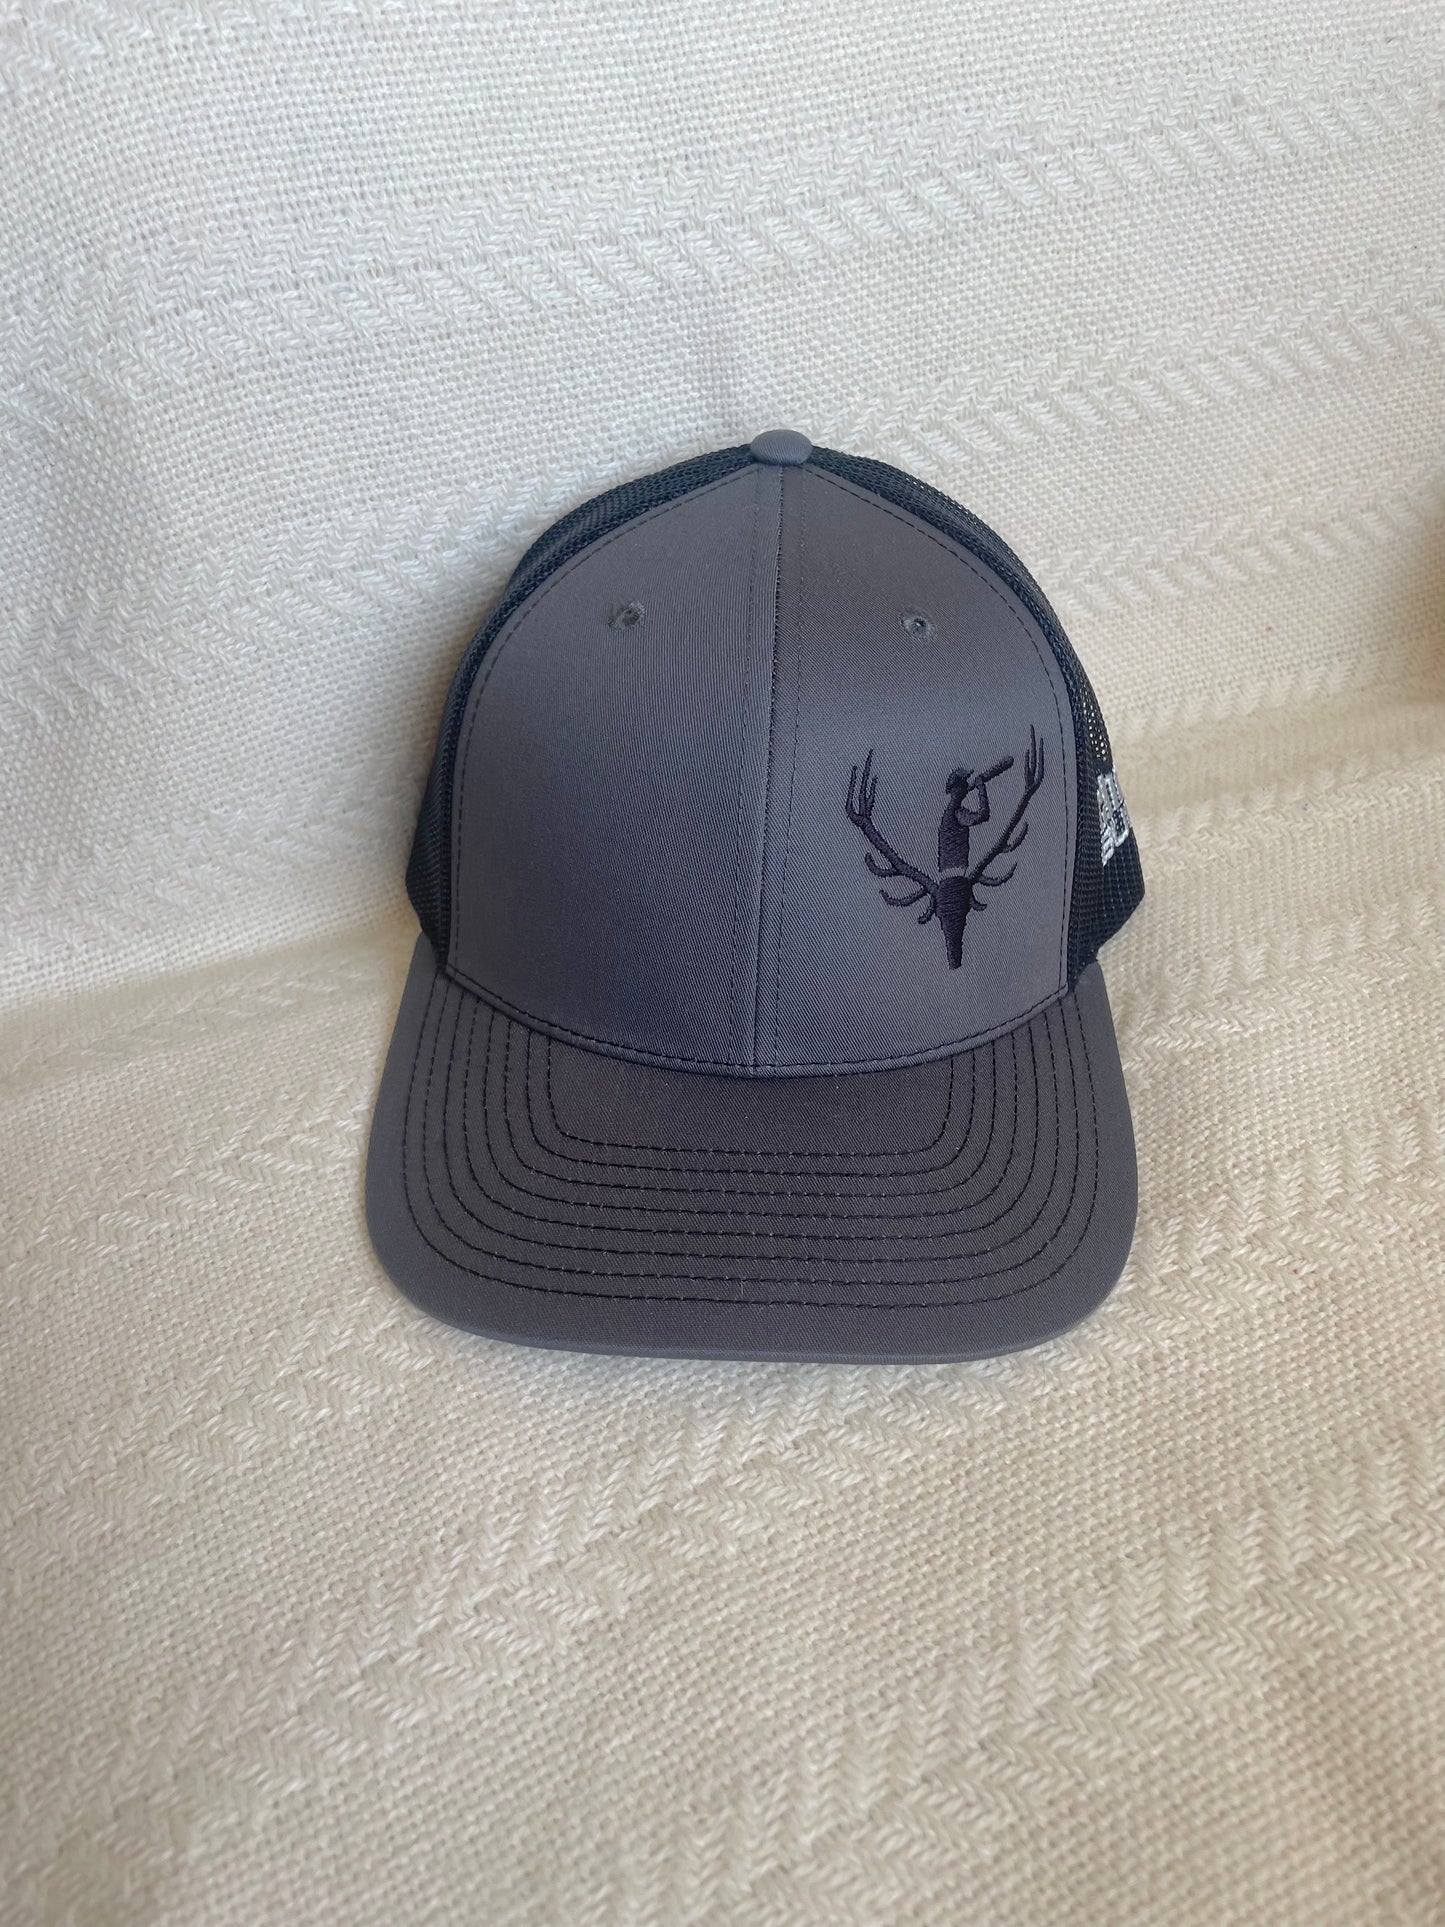 Trucker Hat - Charcoal/Black with Side Logo - Med/Large